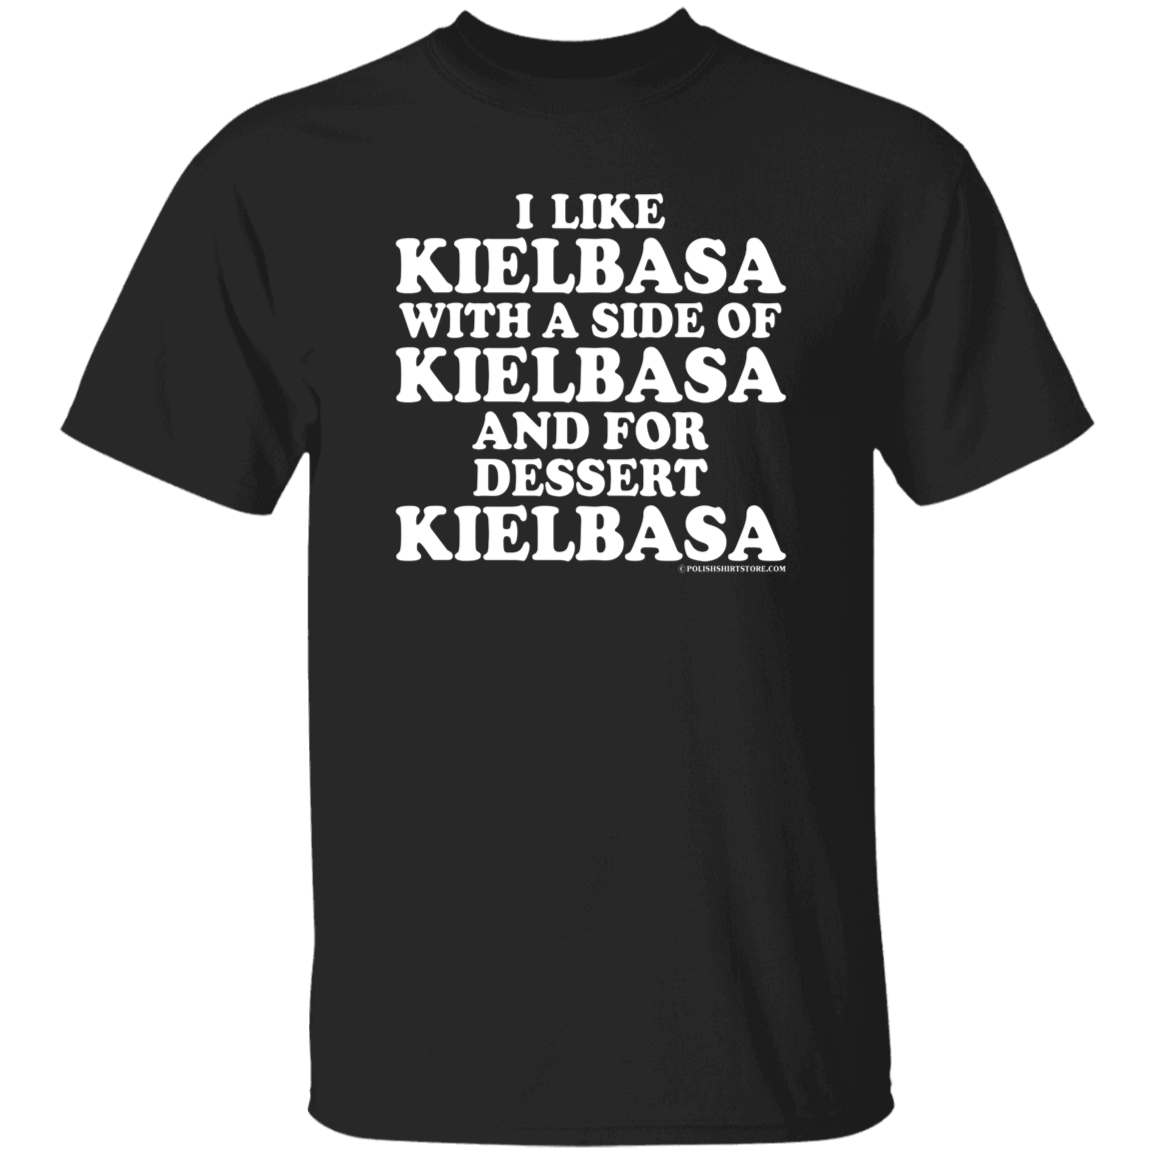 Kielbasa With A Side Of Kielbasa Apparel CustomCat G500 5.3 oz. T-Shirt Black S